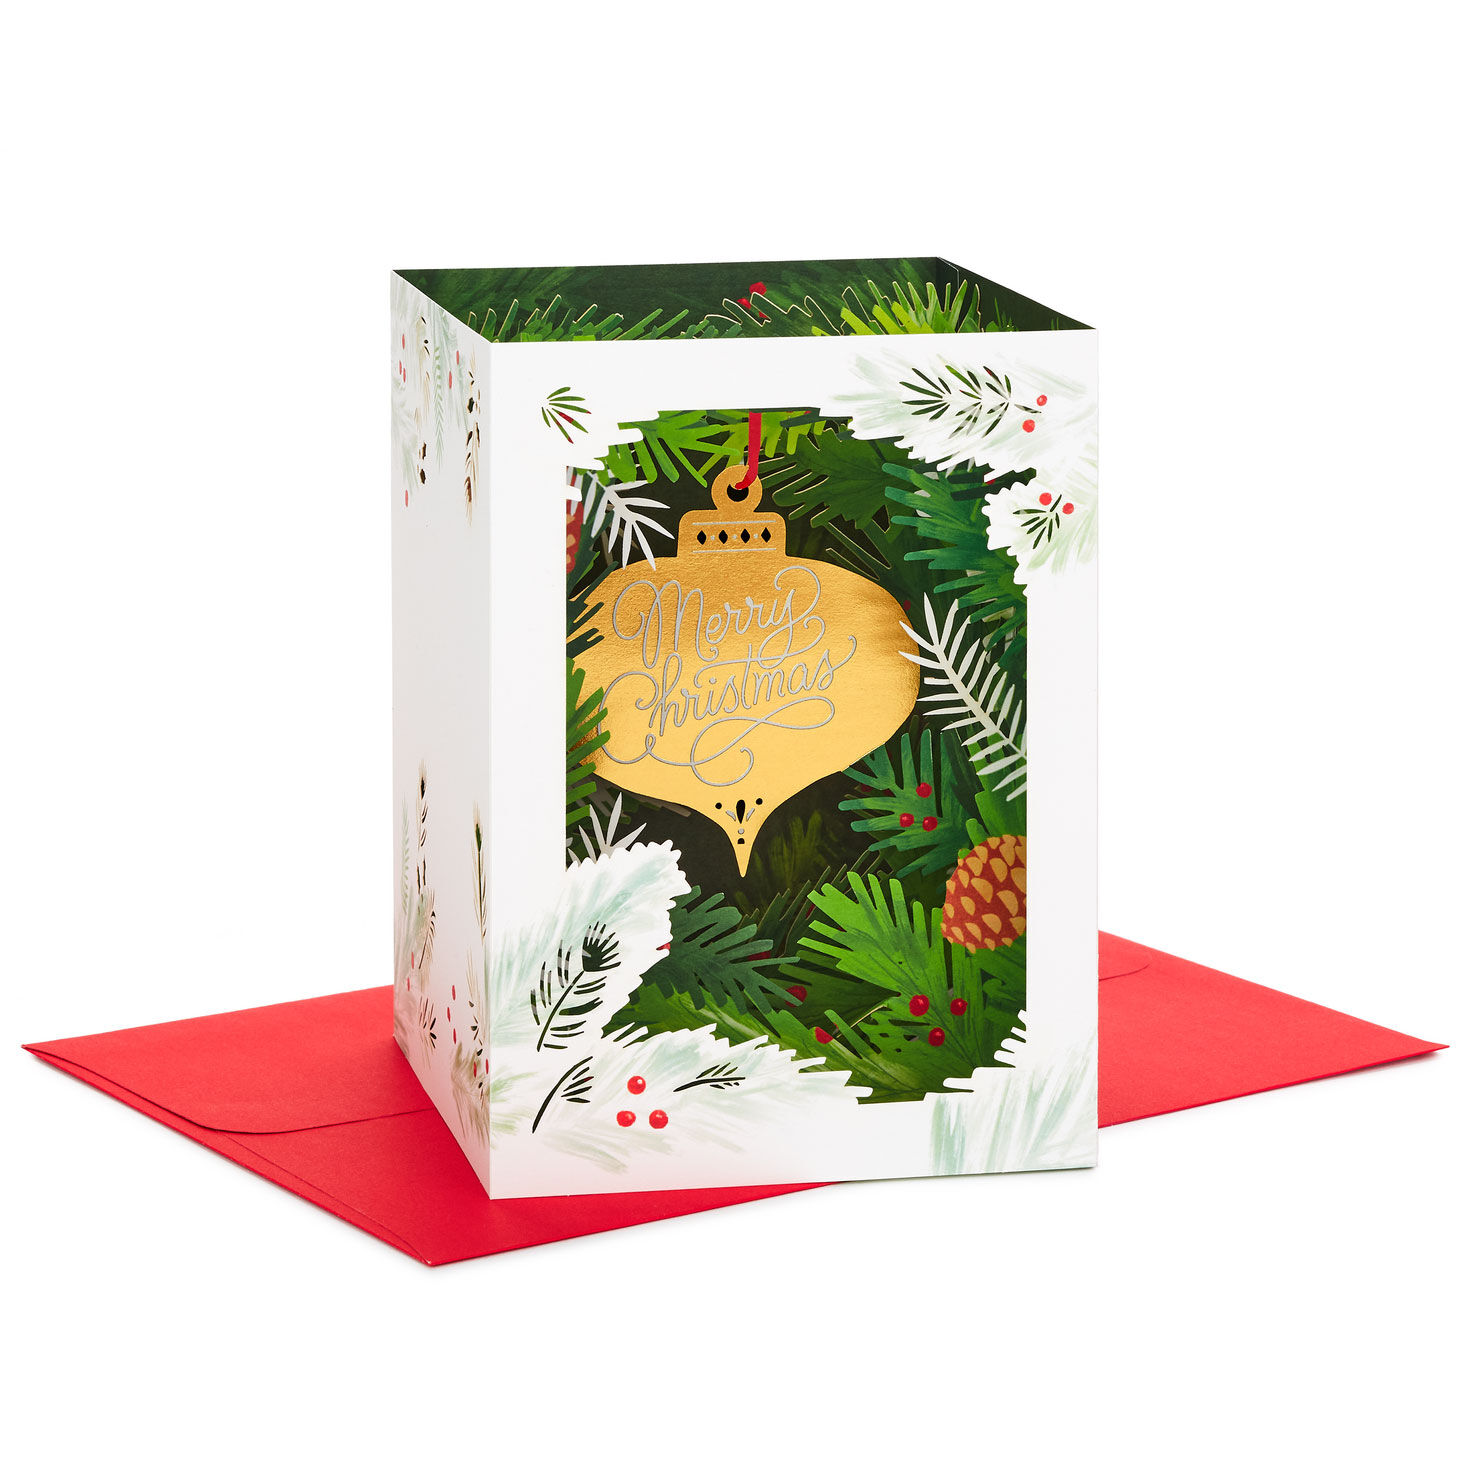 Merry Christmas Ornament 3D Pop-Up Christmas Card for only USD 8.99 | Hallmark